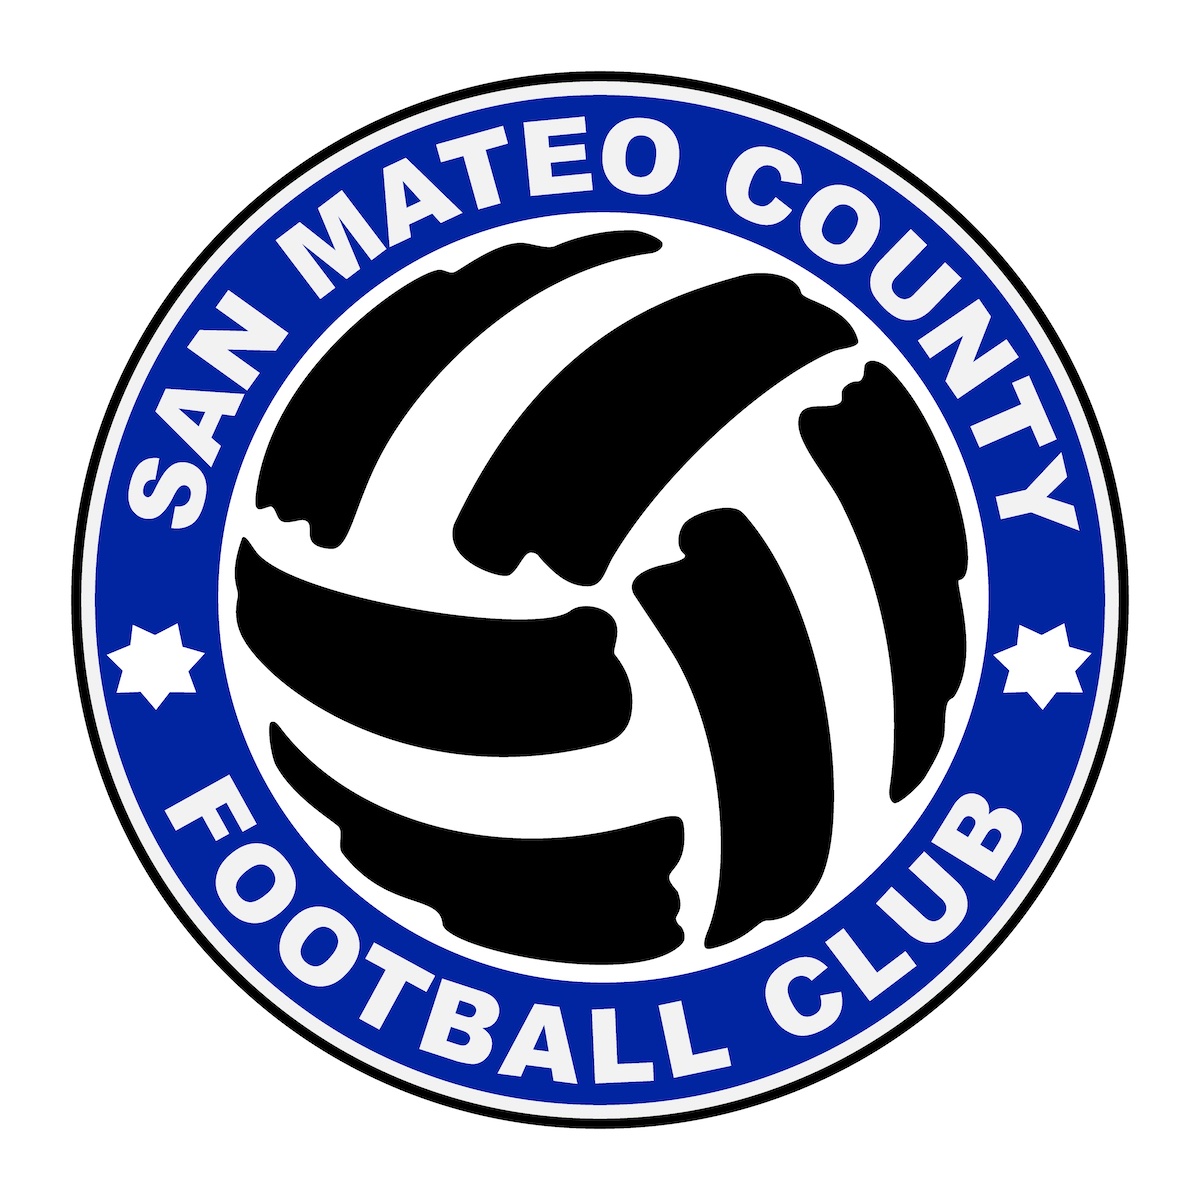 San Mateo County FC team badge